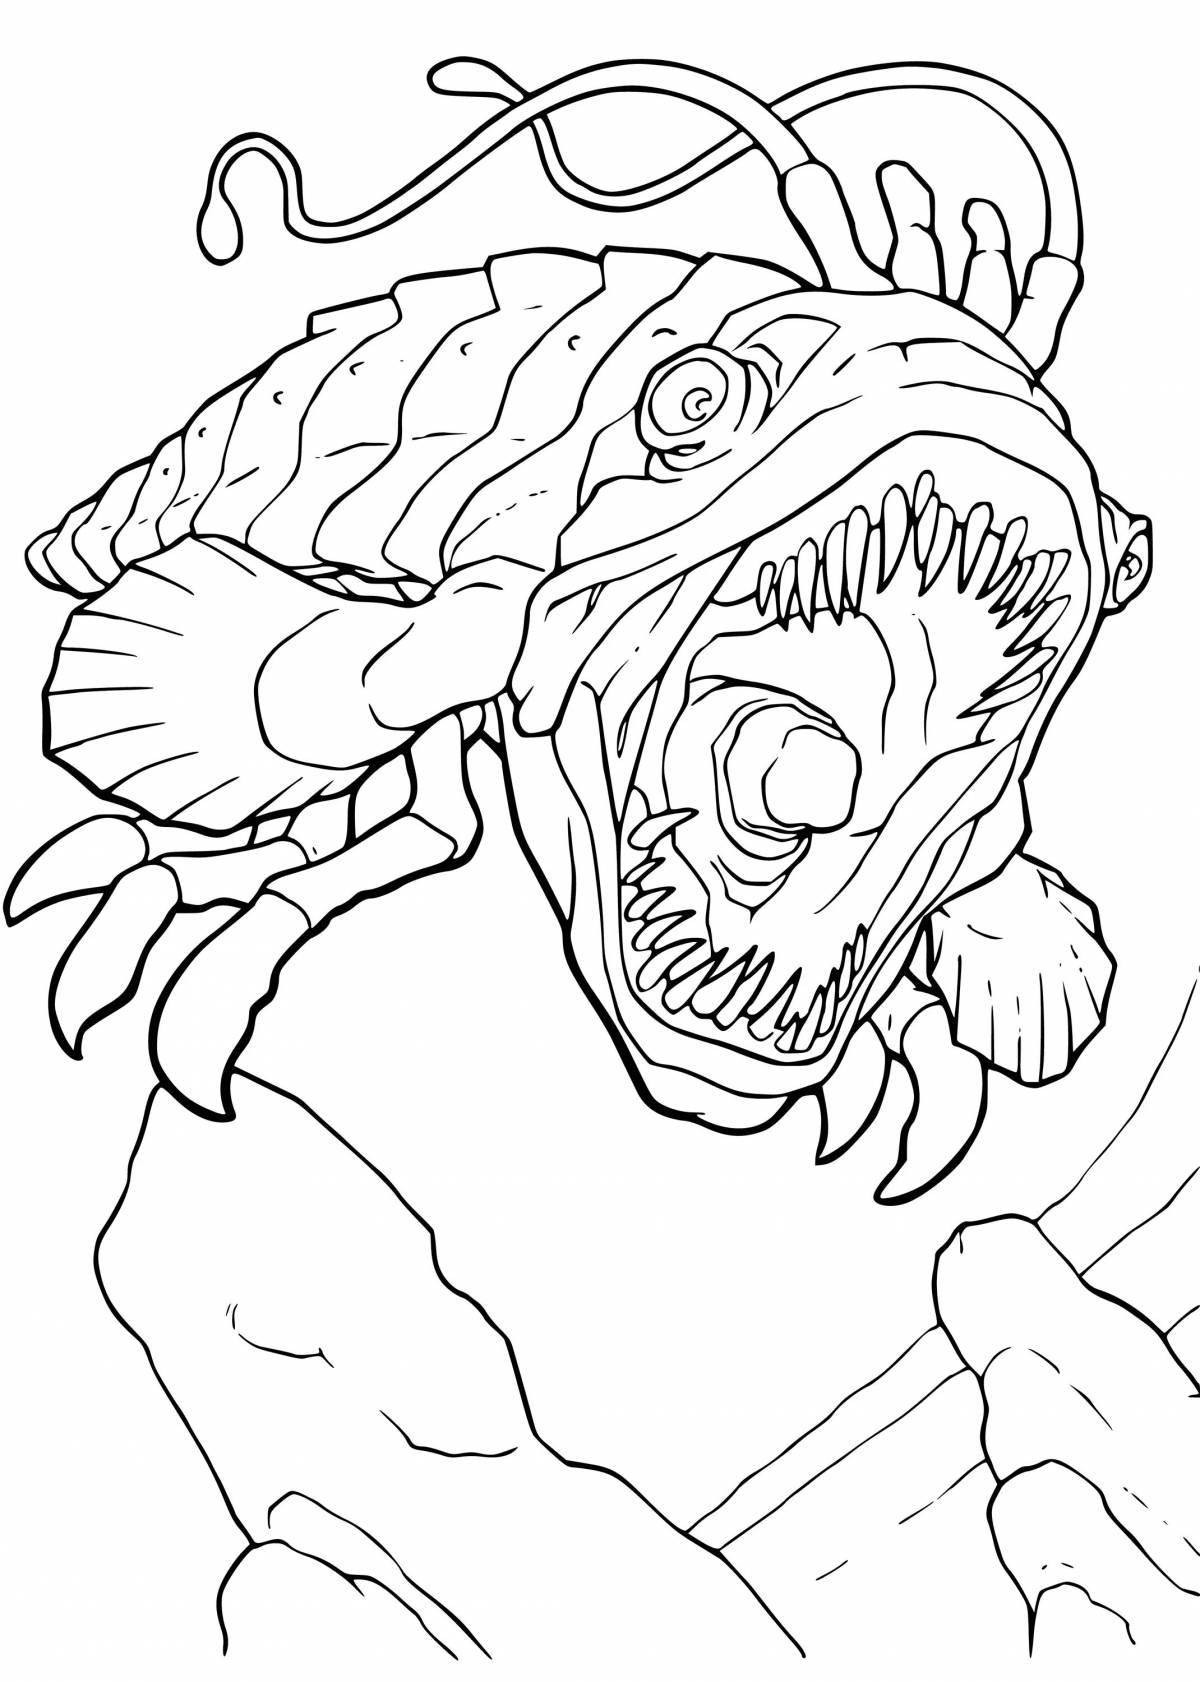 Maxi monsters fun coloring book